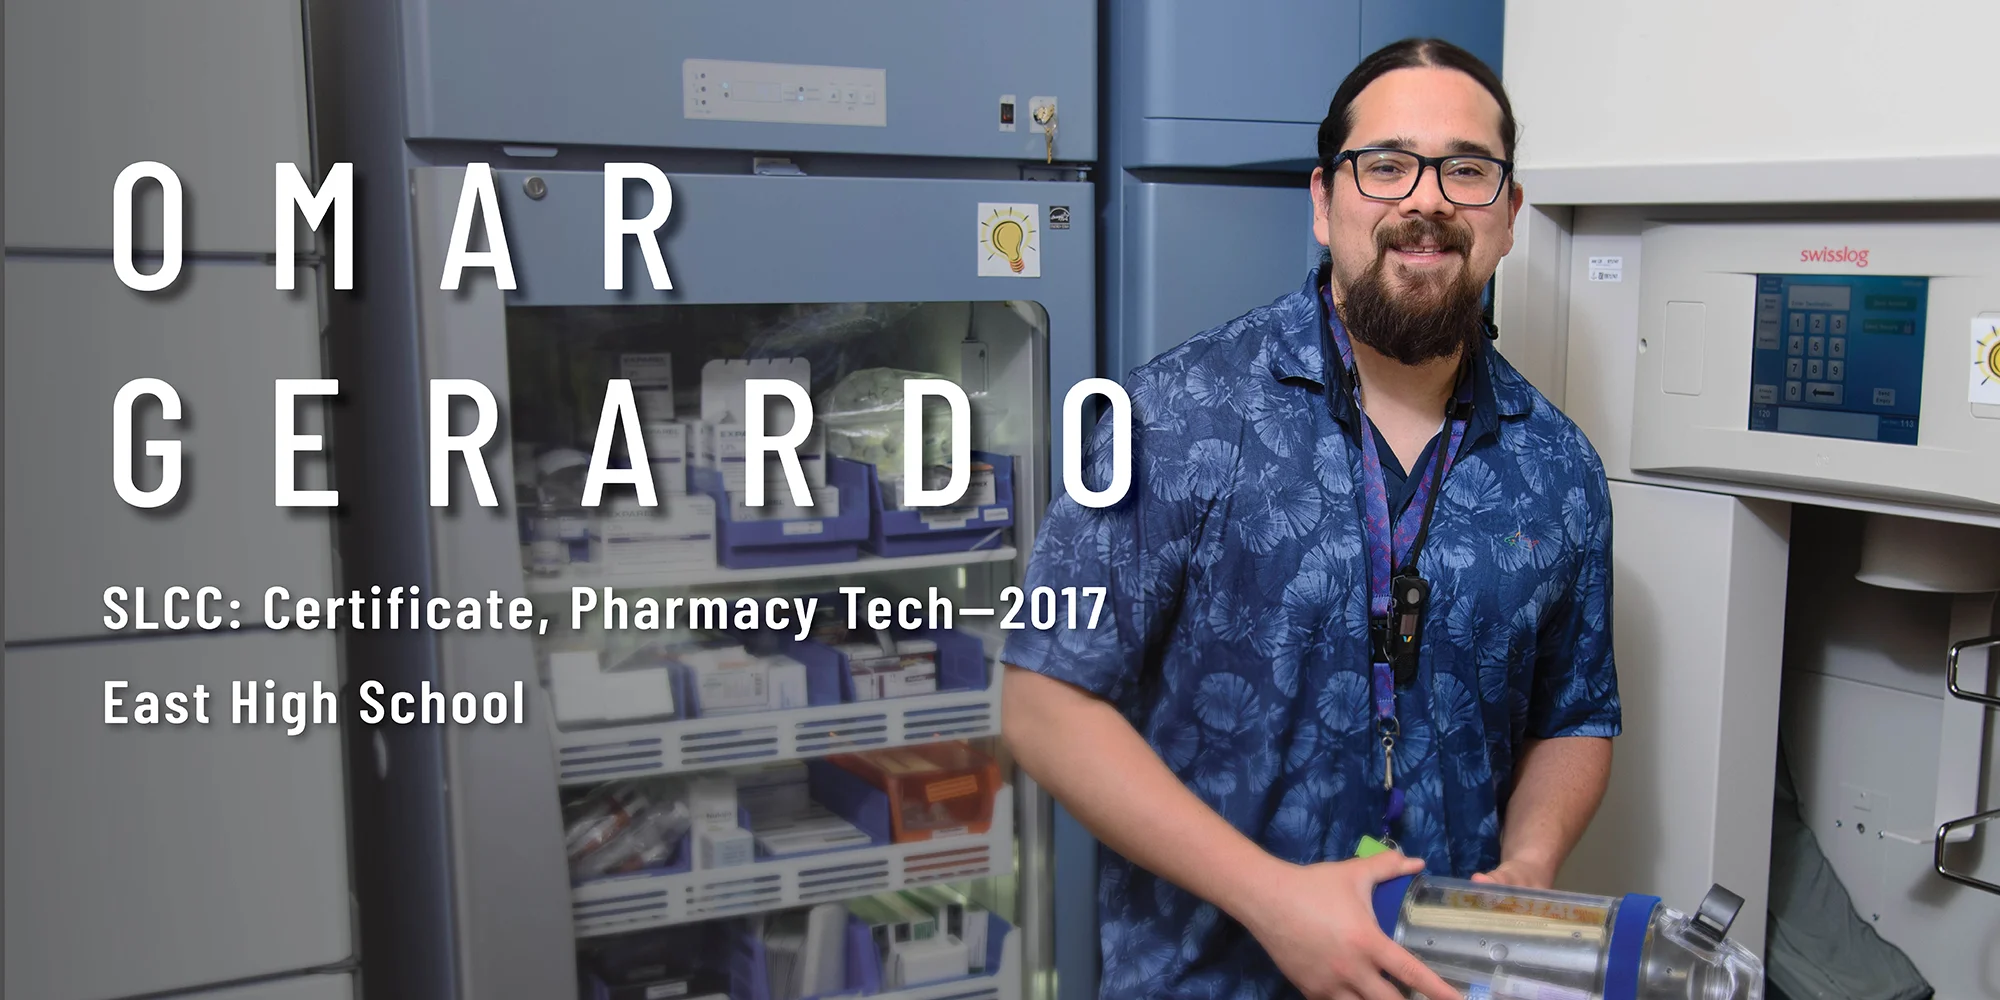 Omar Gerardo, SLCC Certificate Pharmacy Tech in 2017 , From East High School